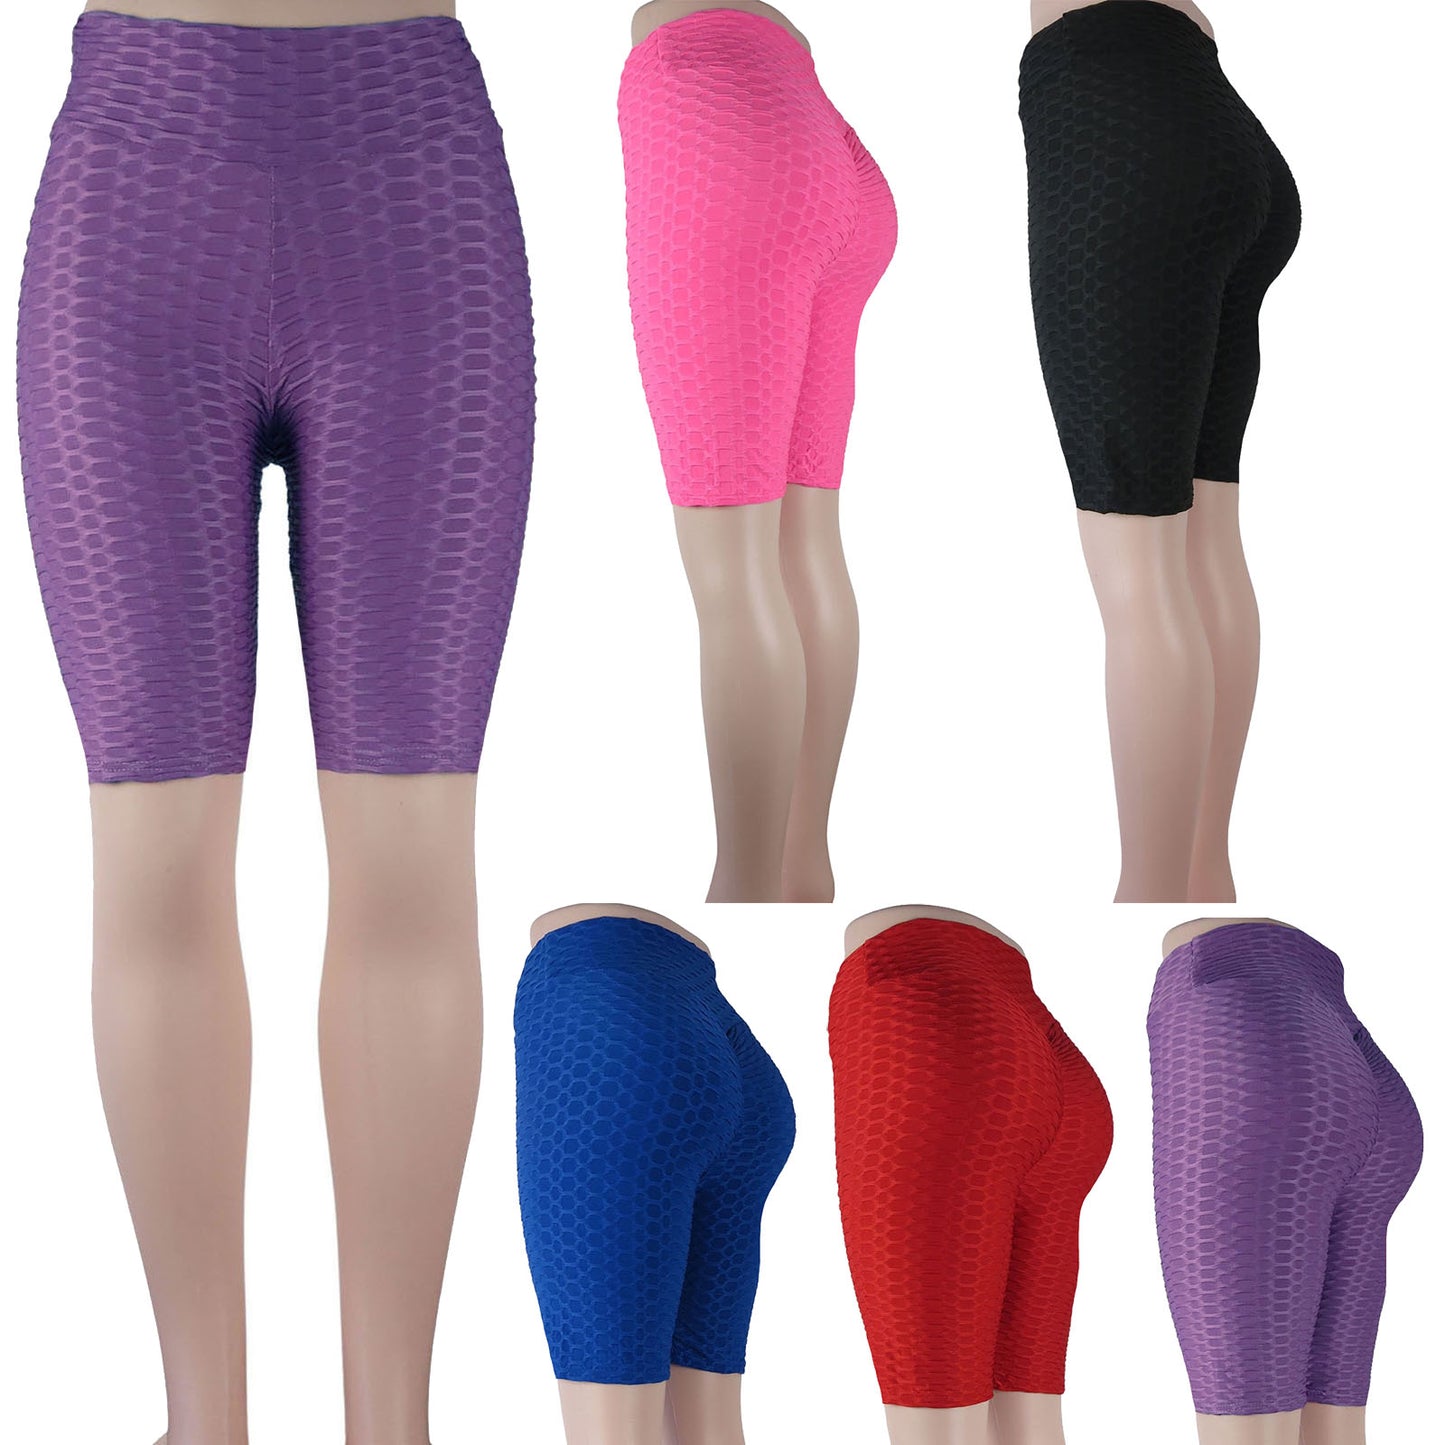 Wholesale TikTok bubble bike shorts leggings solid color assortment high waist push up butt